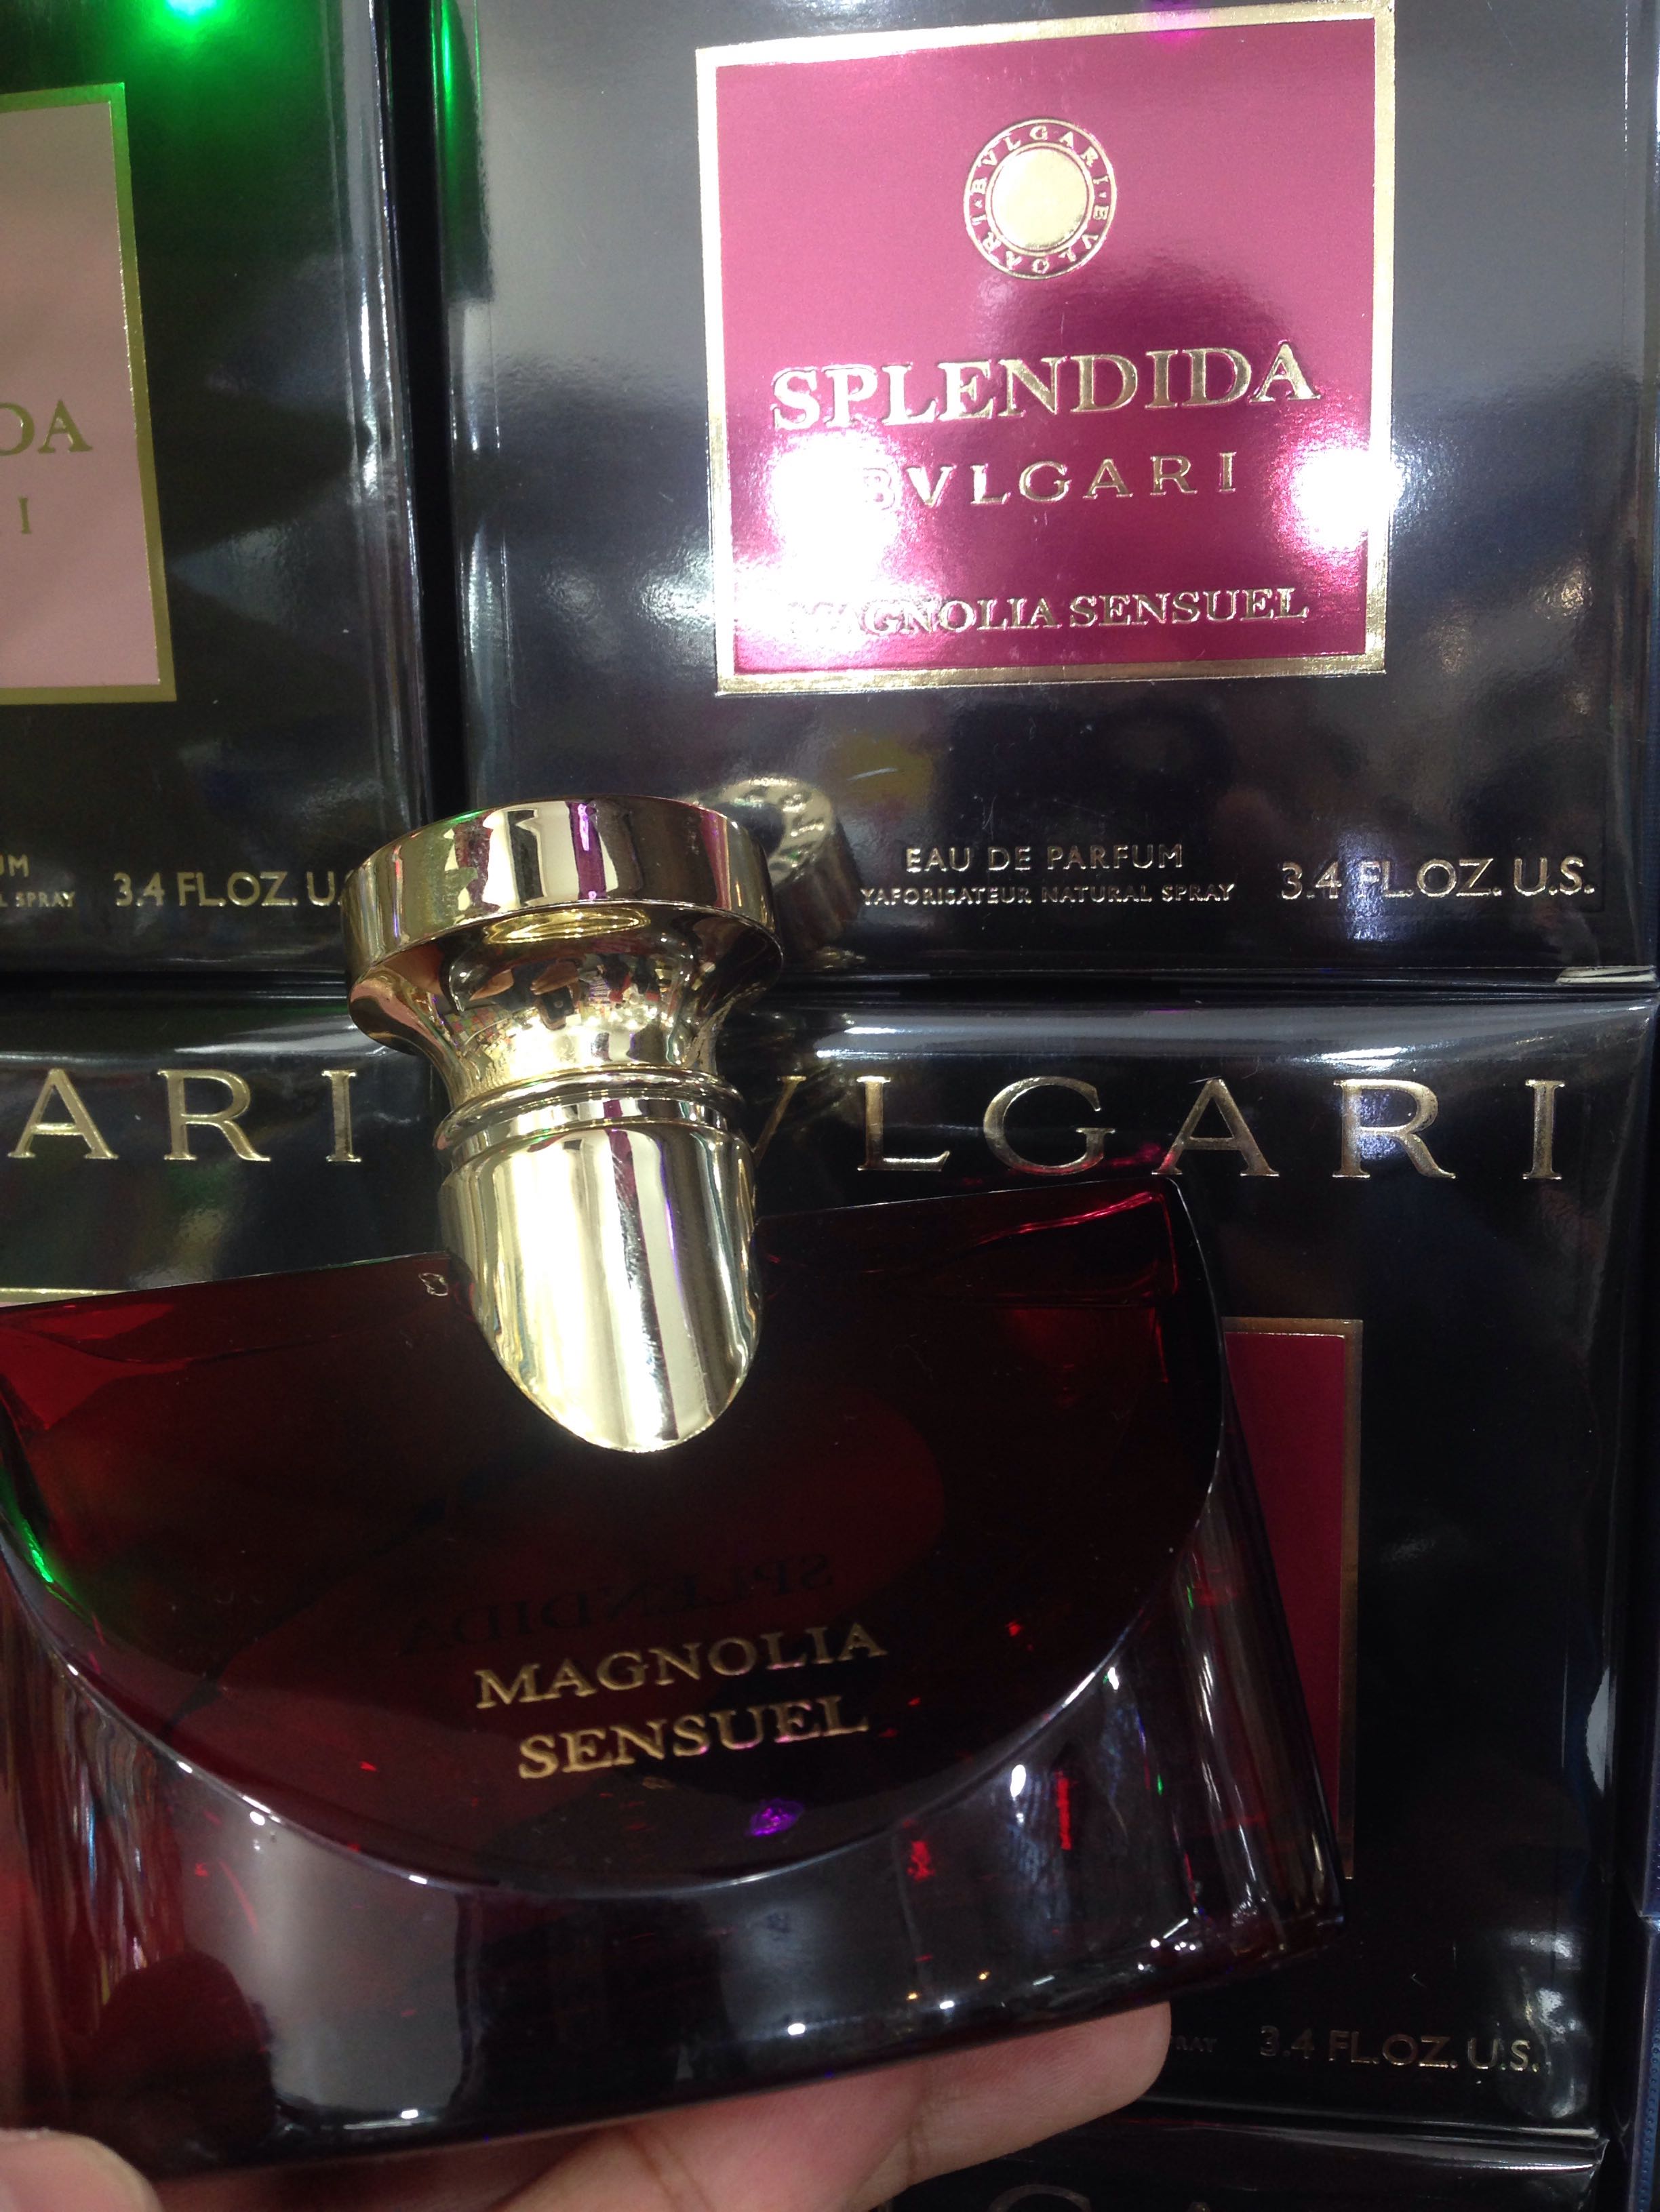 bvlgari splendida magnolia sensuel eau de parfum